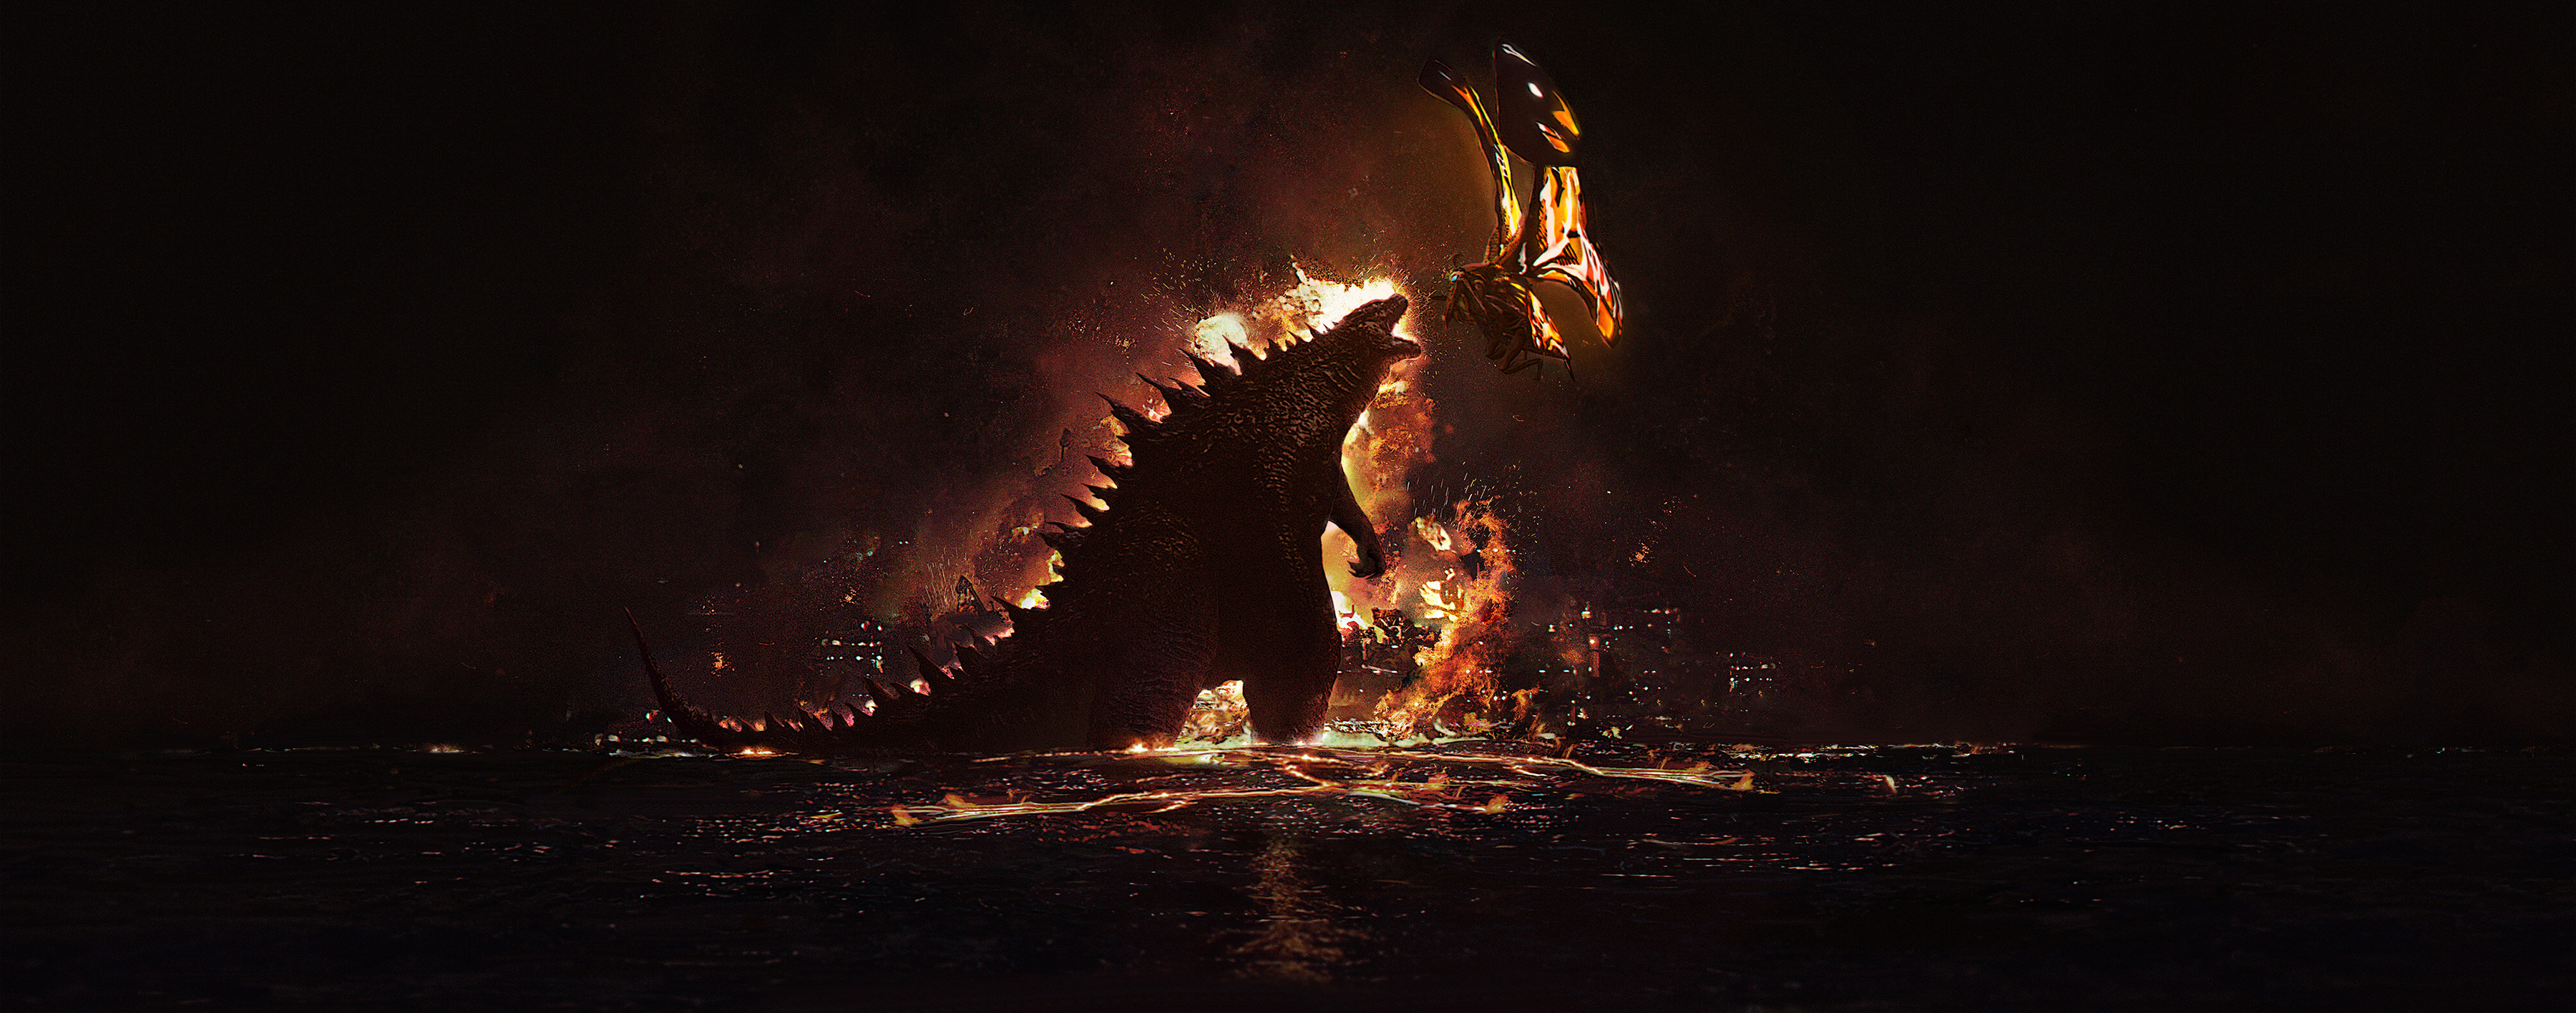 Godzilla Artwork Battle Dark Fire David Bocquillon Carrasco 3600x1416